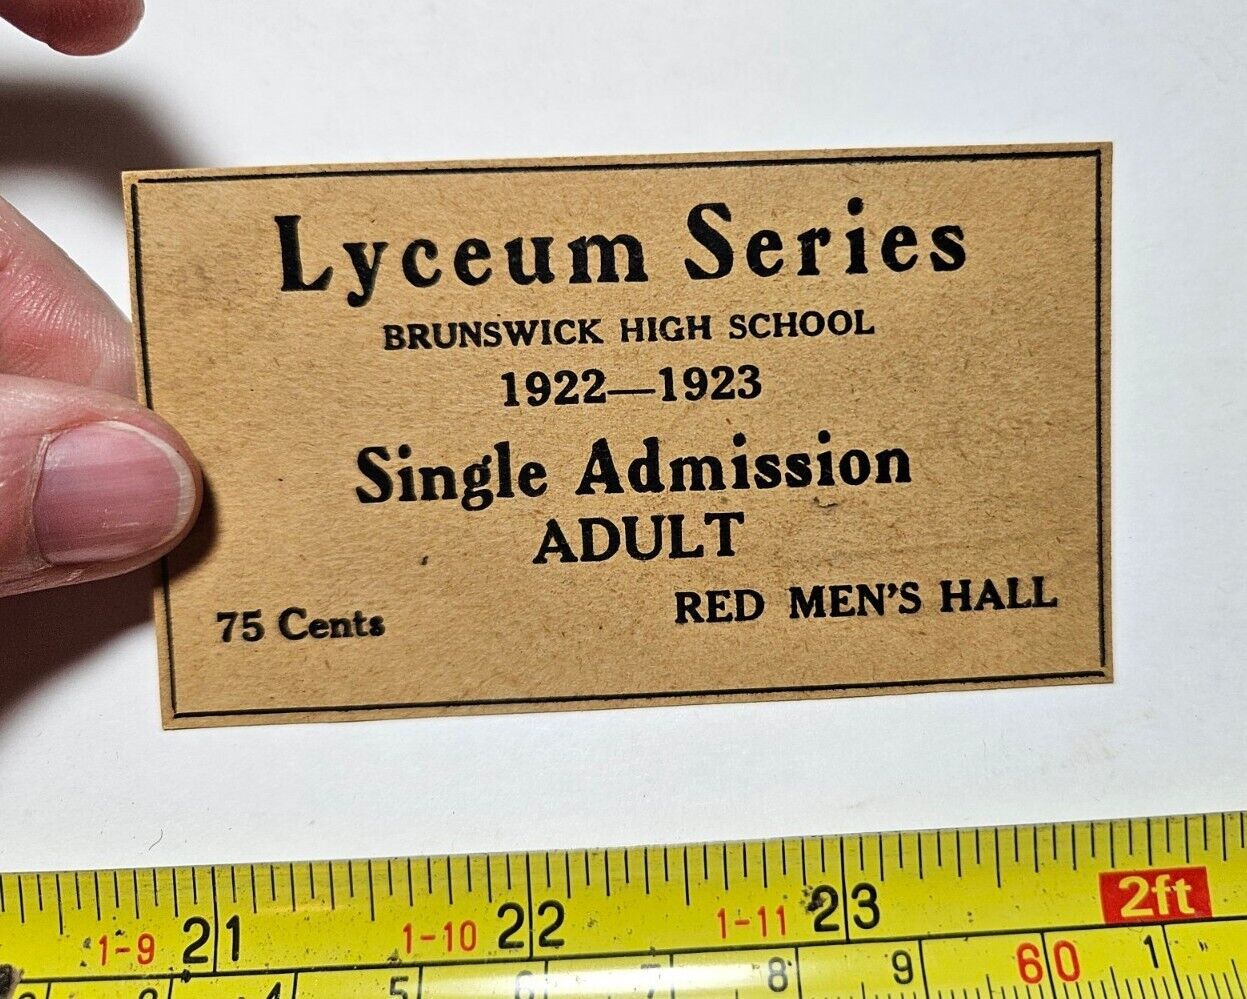 Vtg 1922-23 Lyceum Series Brunswick High School Red Men's Hall Admission Ticket